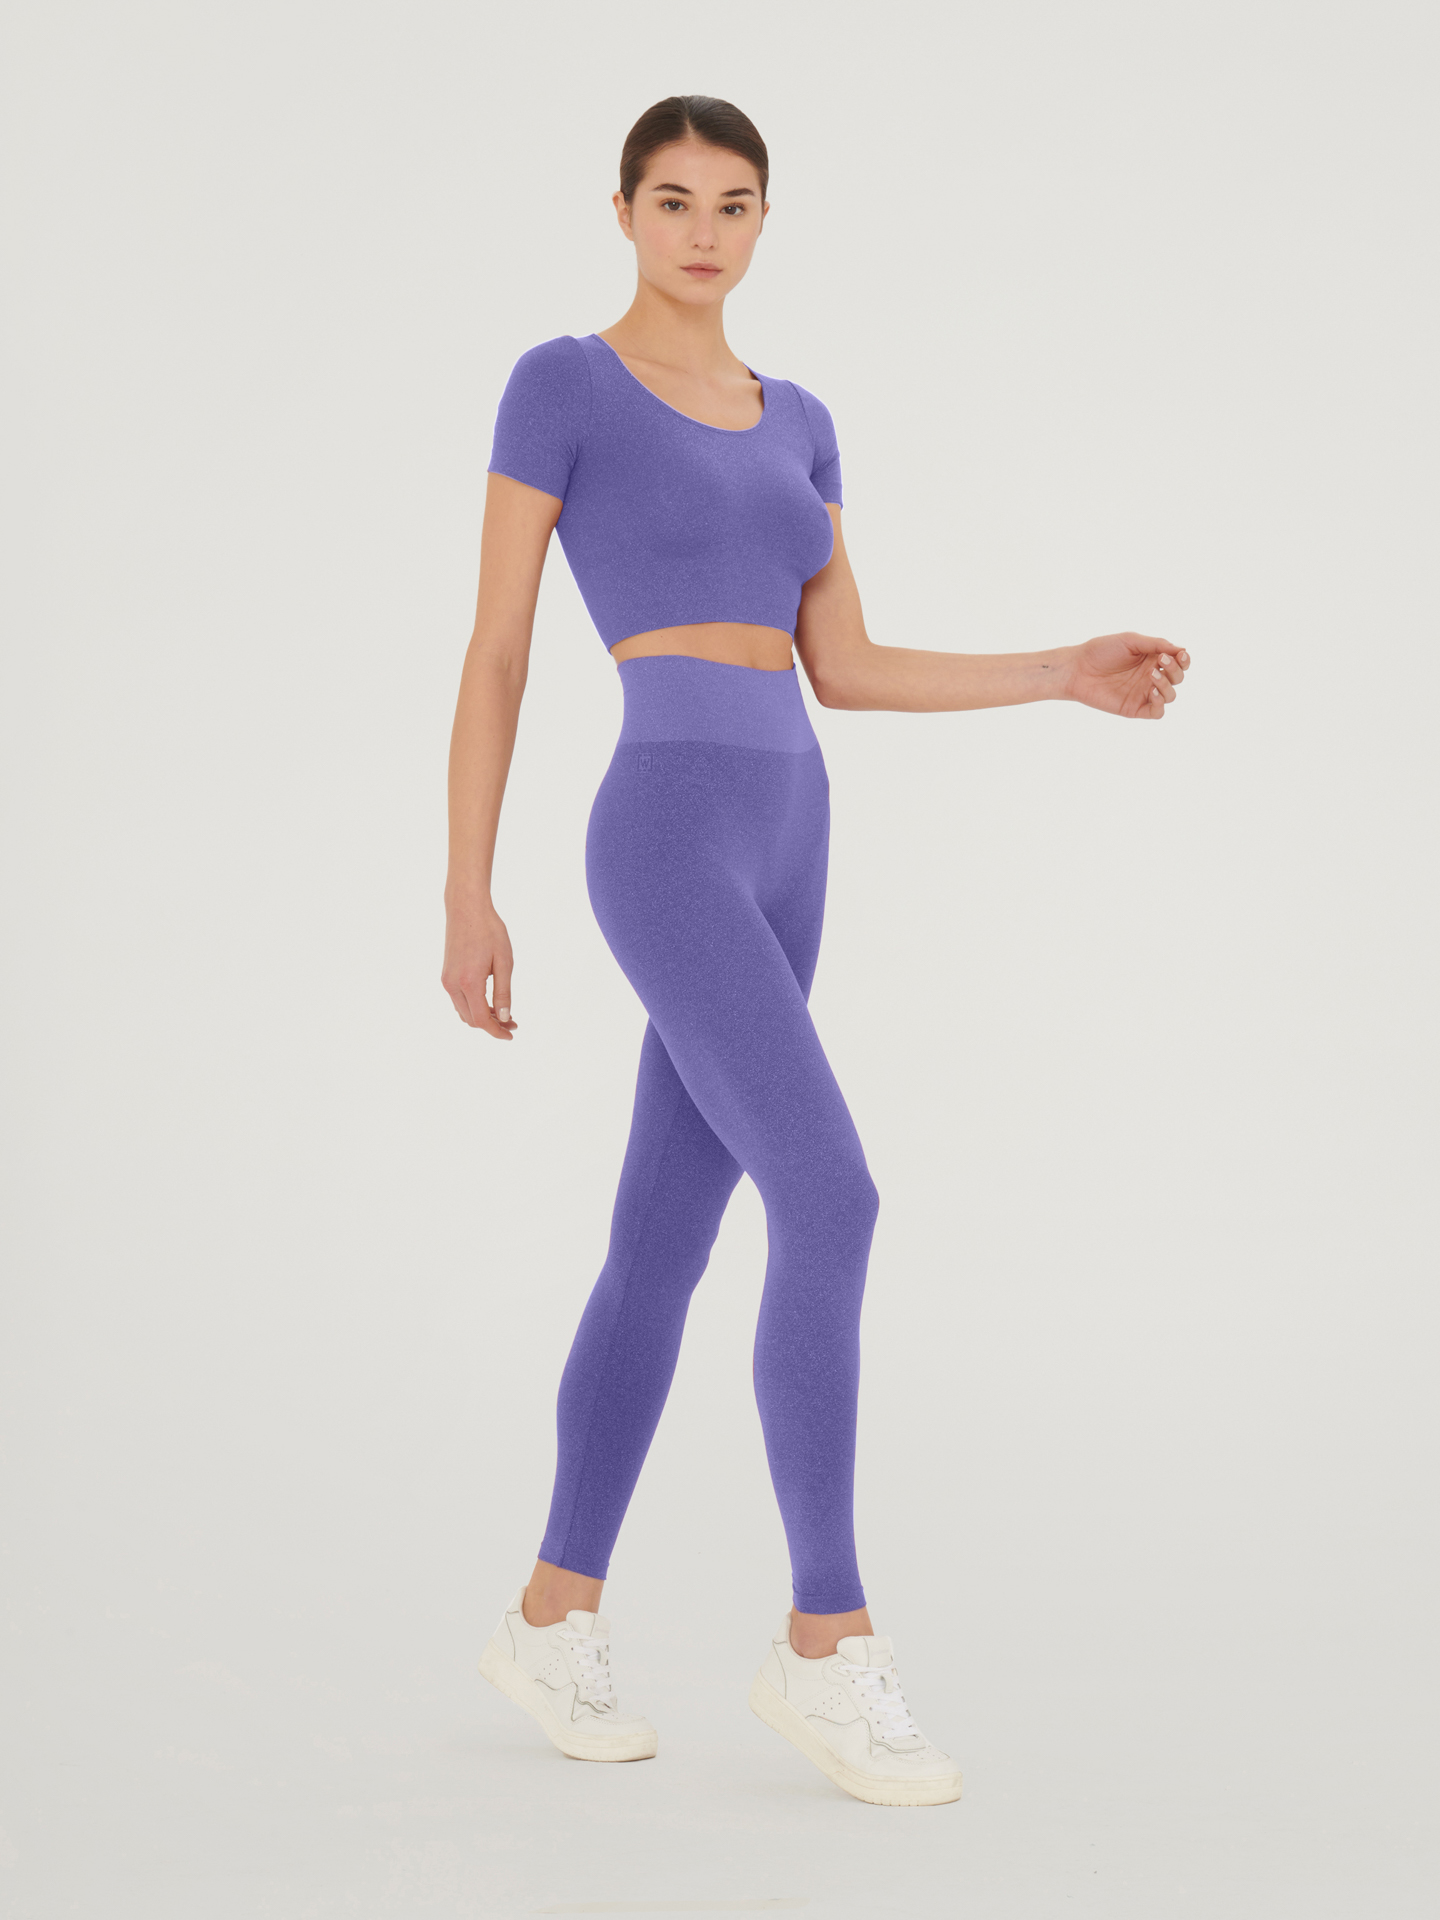 Wolford - Shiny Crop Top, Frau, ultra violet/light aquamarine, Größe: XS von Wolford